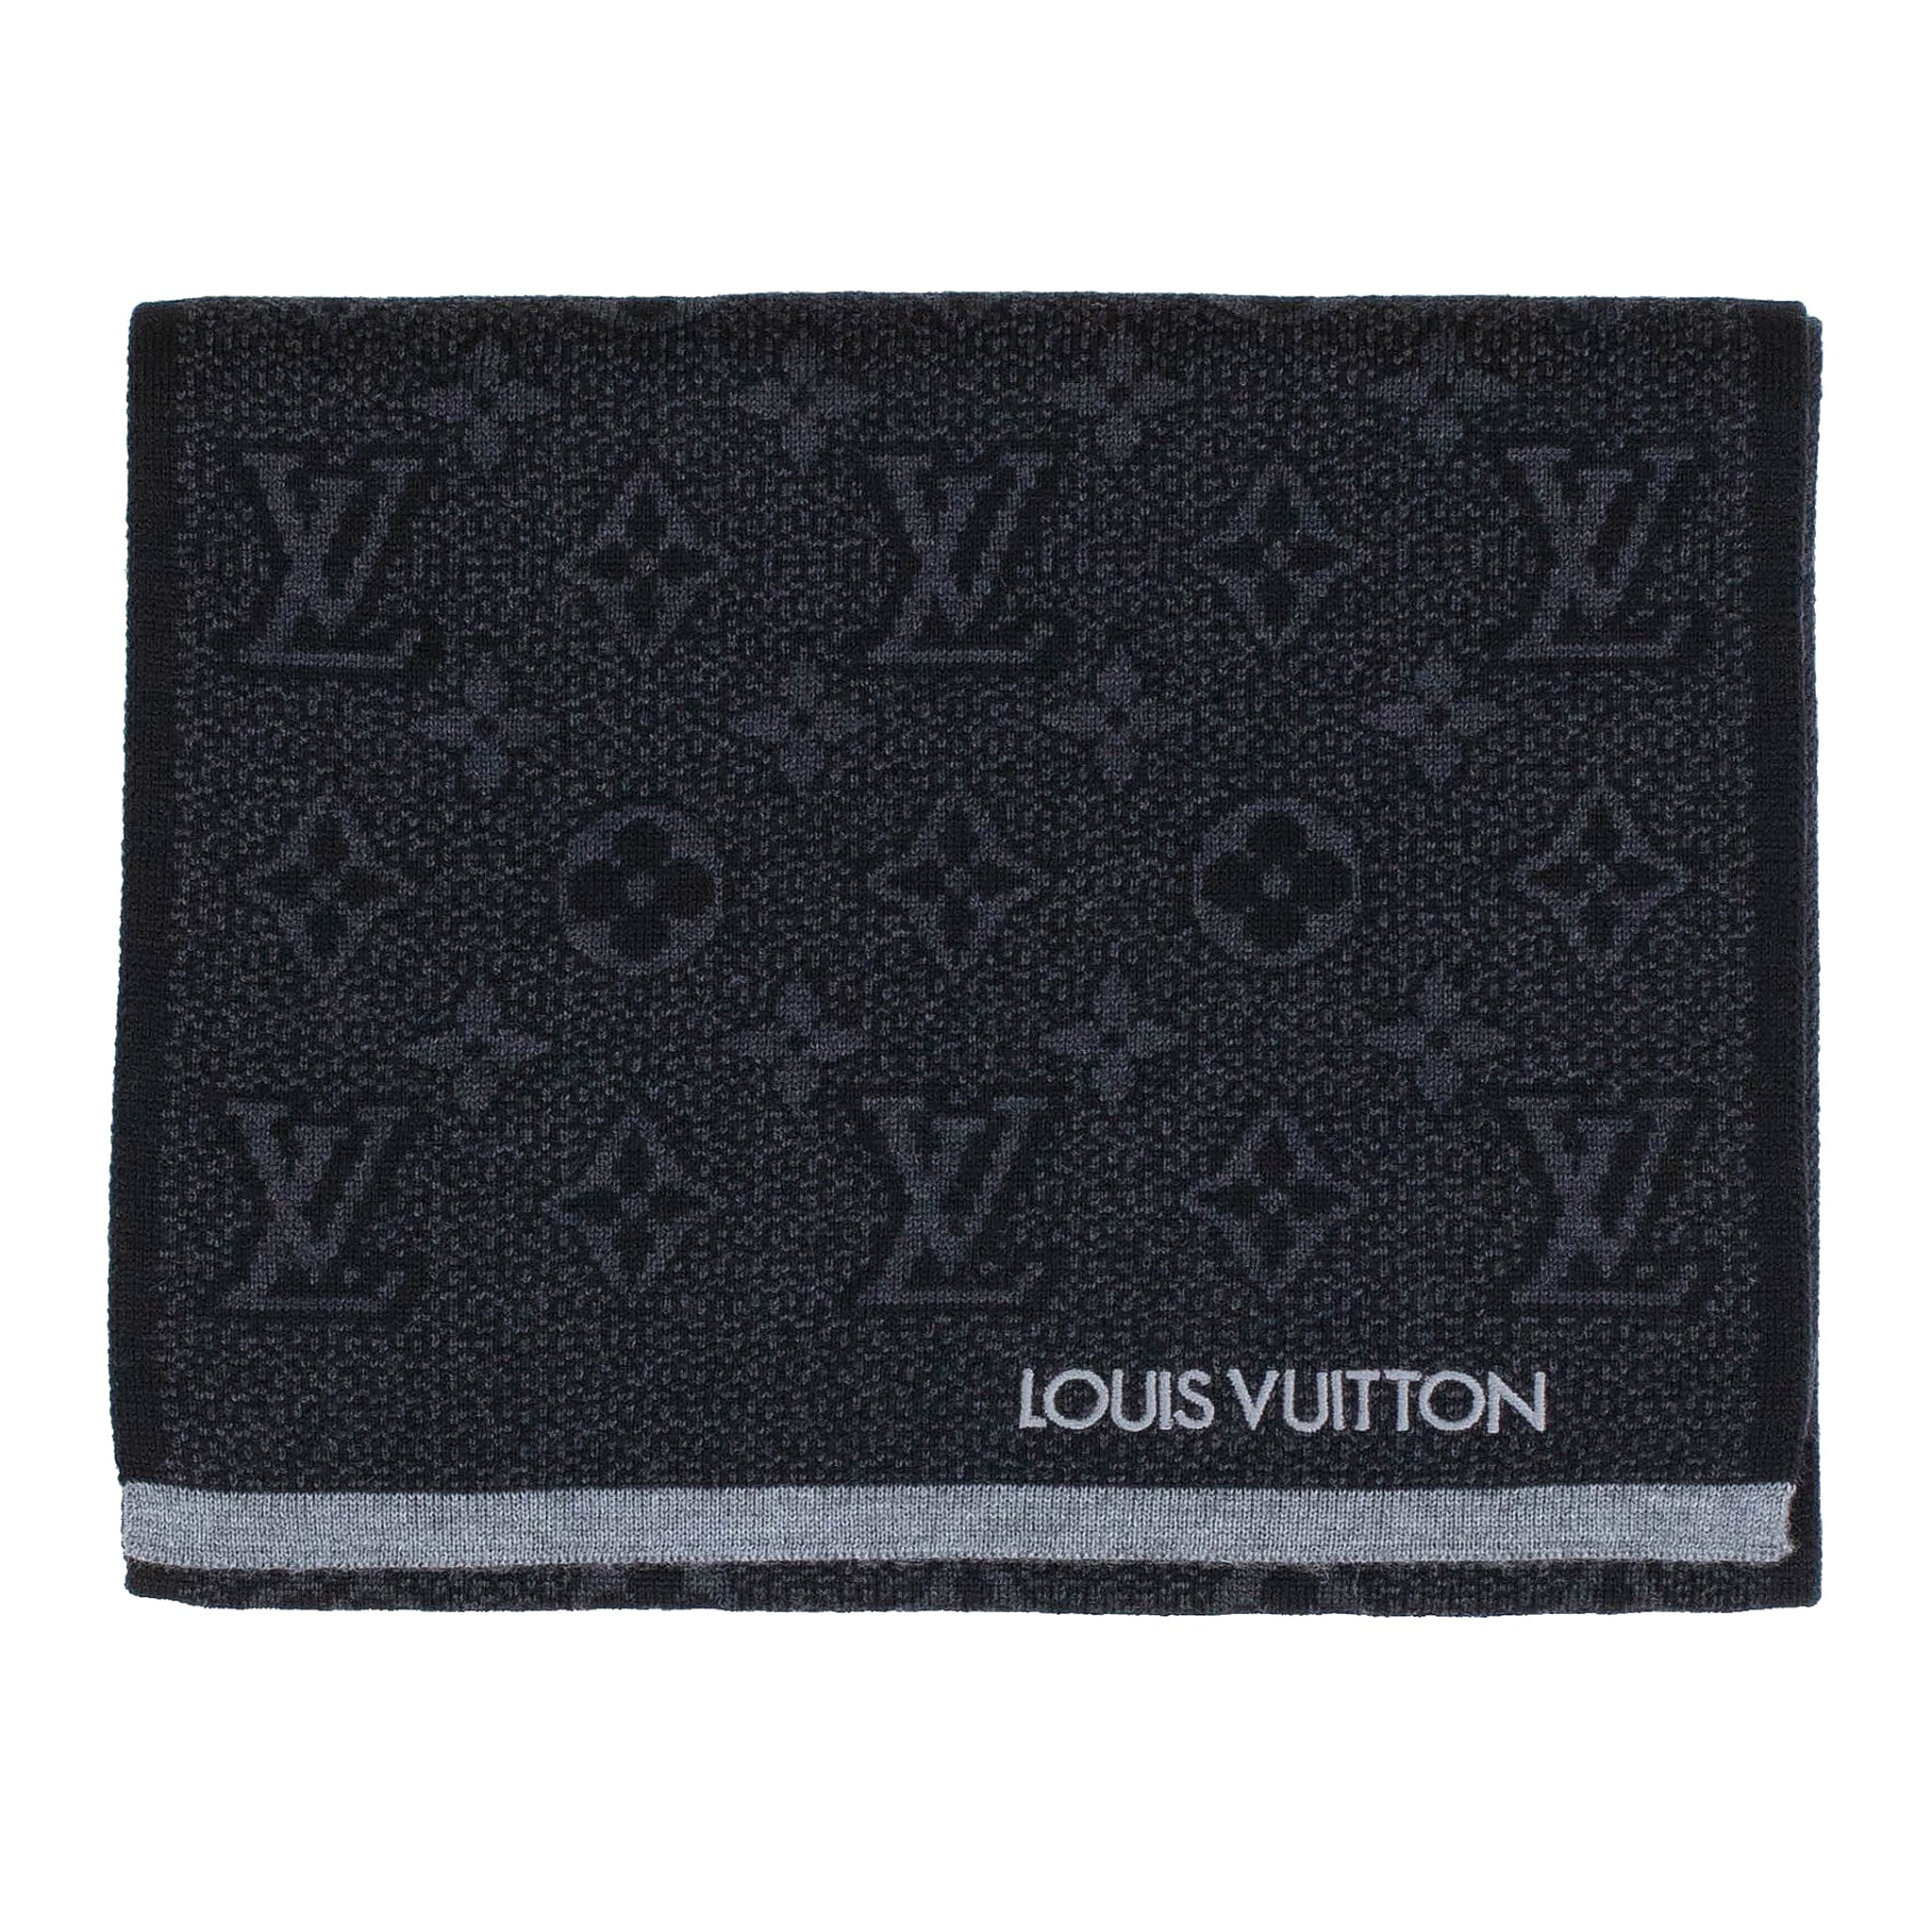 Louis Vuitton - Karakoram Denim Jacket - Black - Men - Size: 50 - Luxury